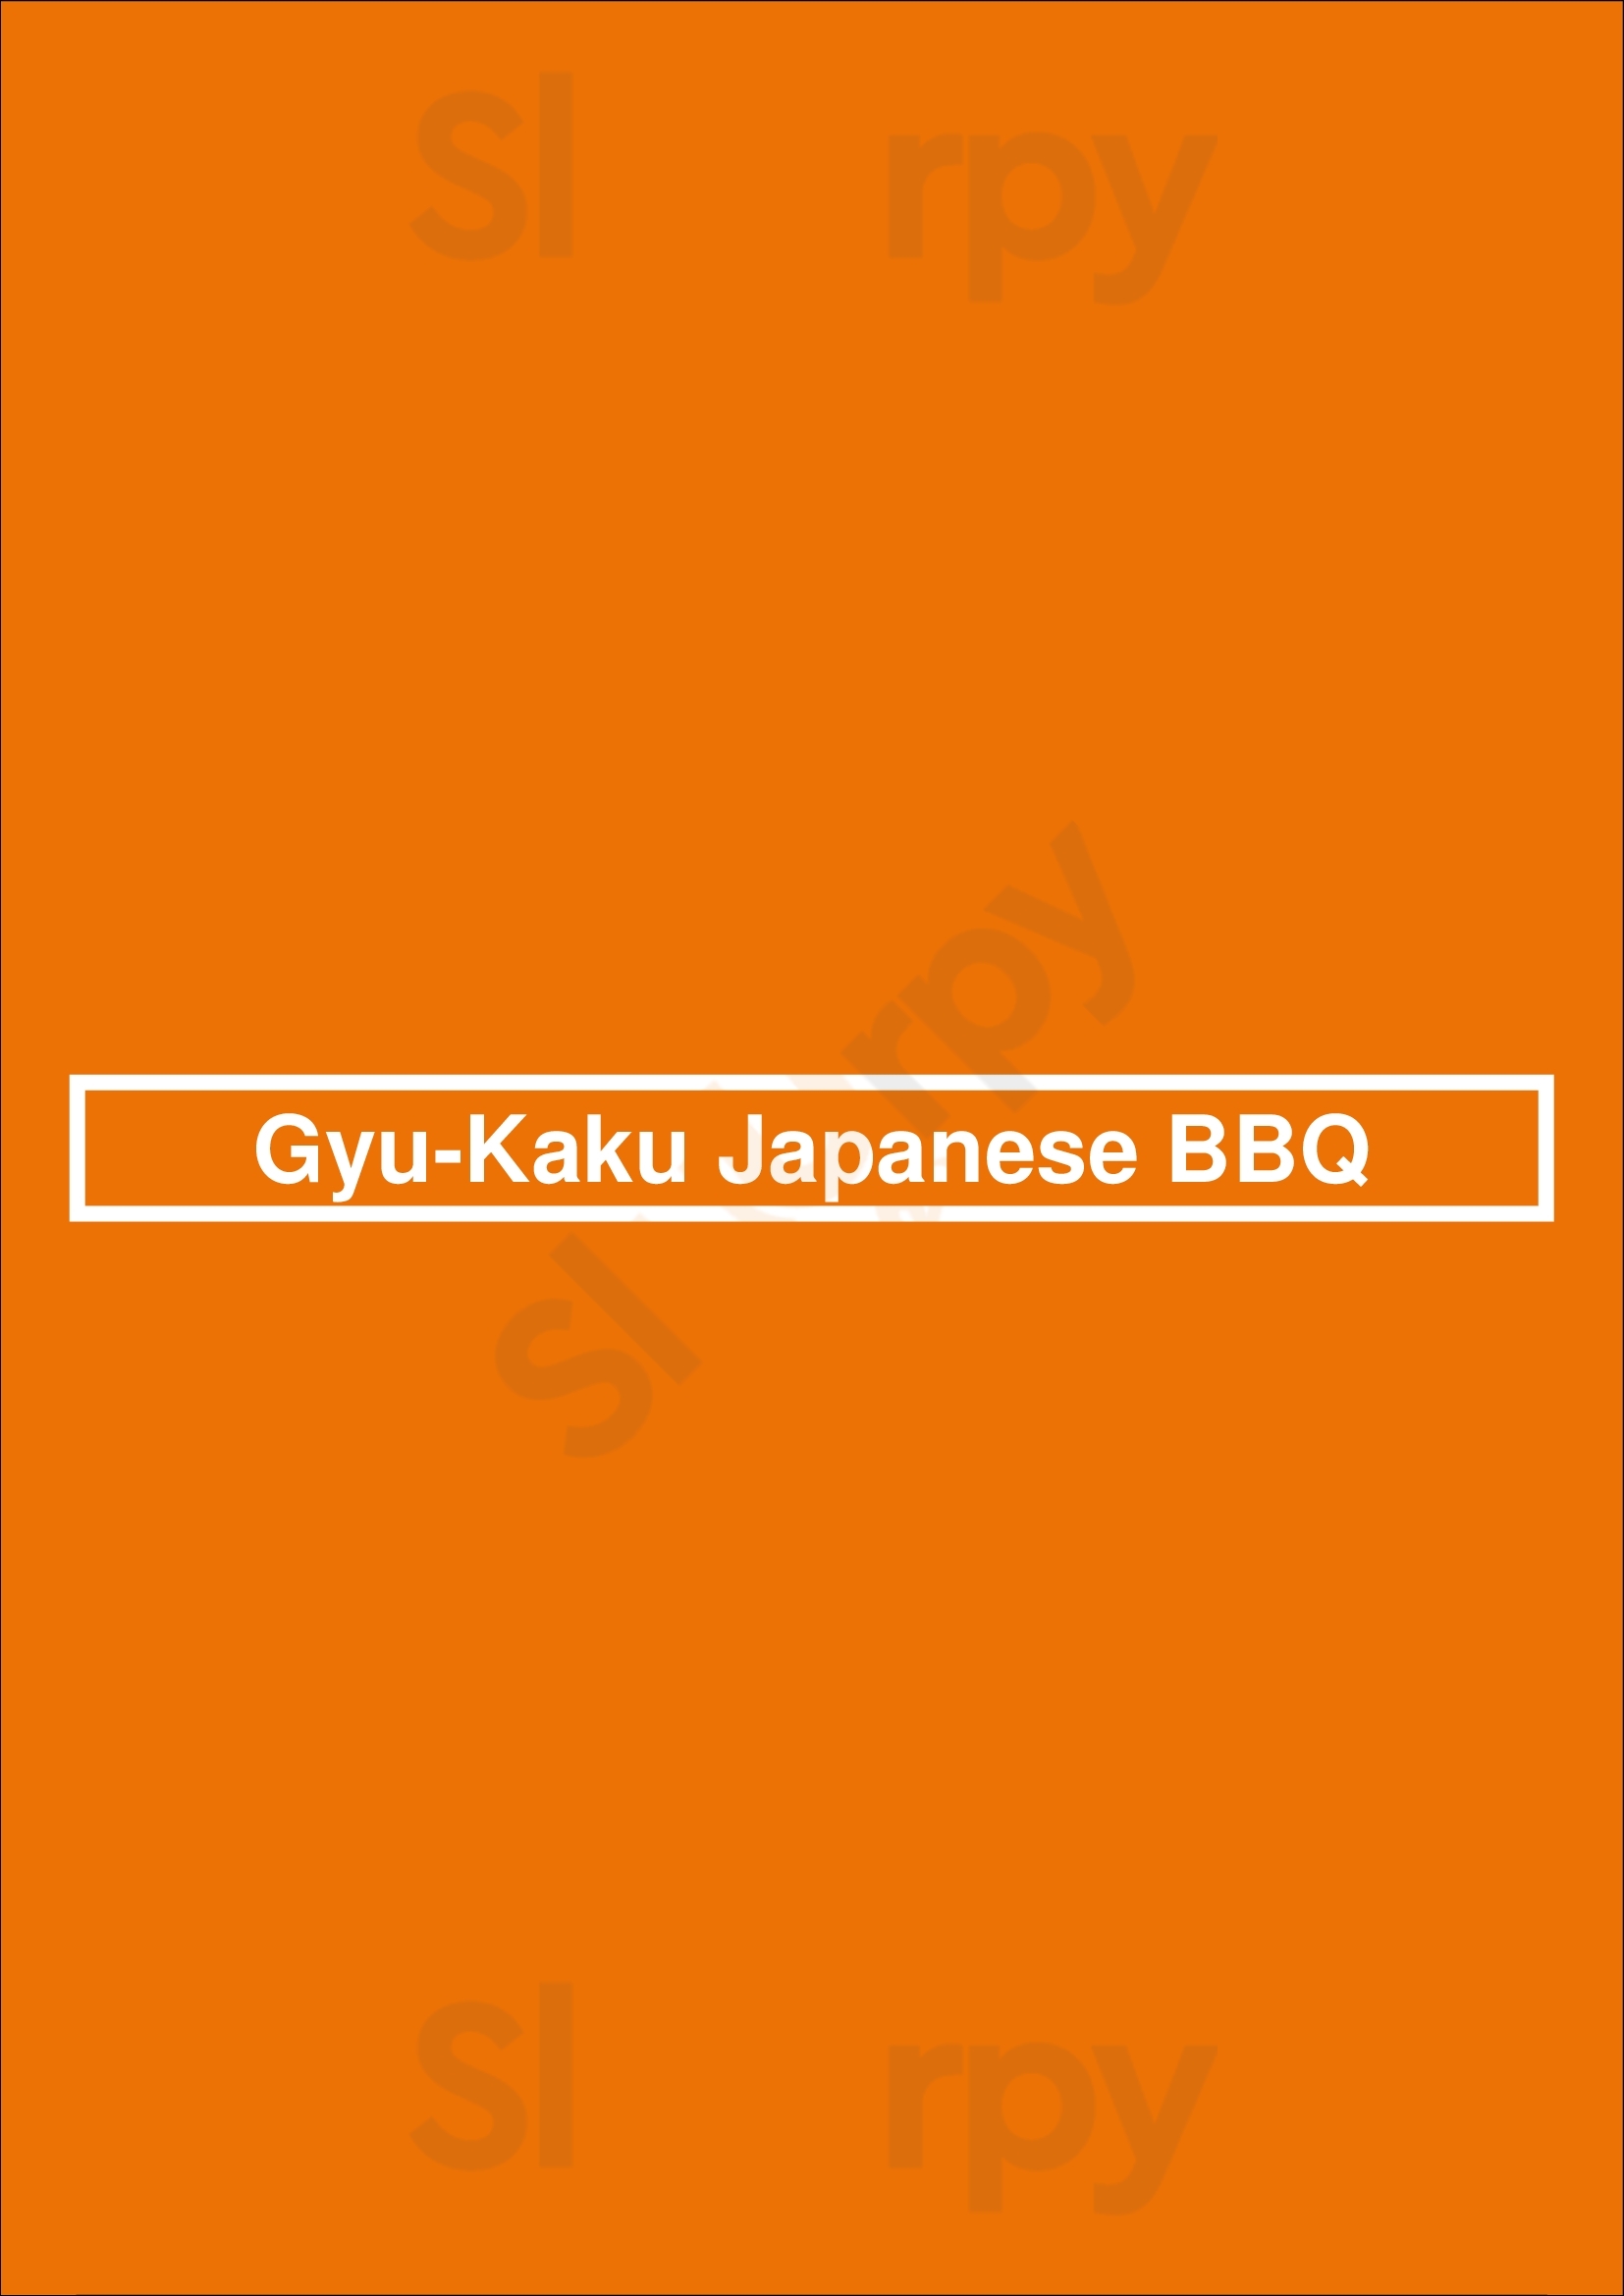 Gyu-kaku Japanese Bbq Montreal Menu - 1